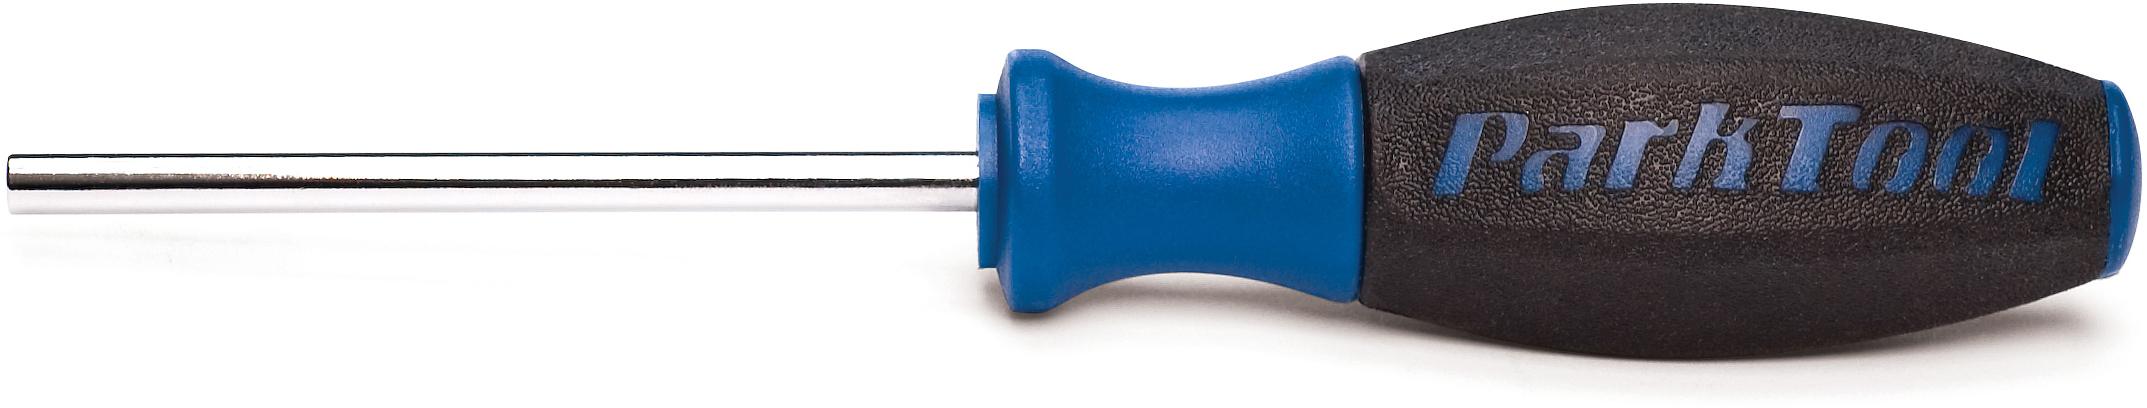 Park Tool Internal Nipple Spoke Wrench (sw-16)  Blue/black